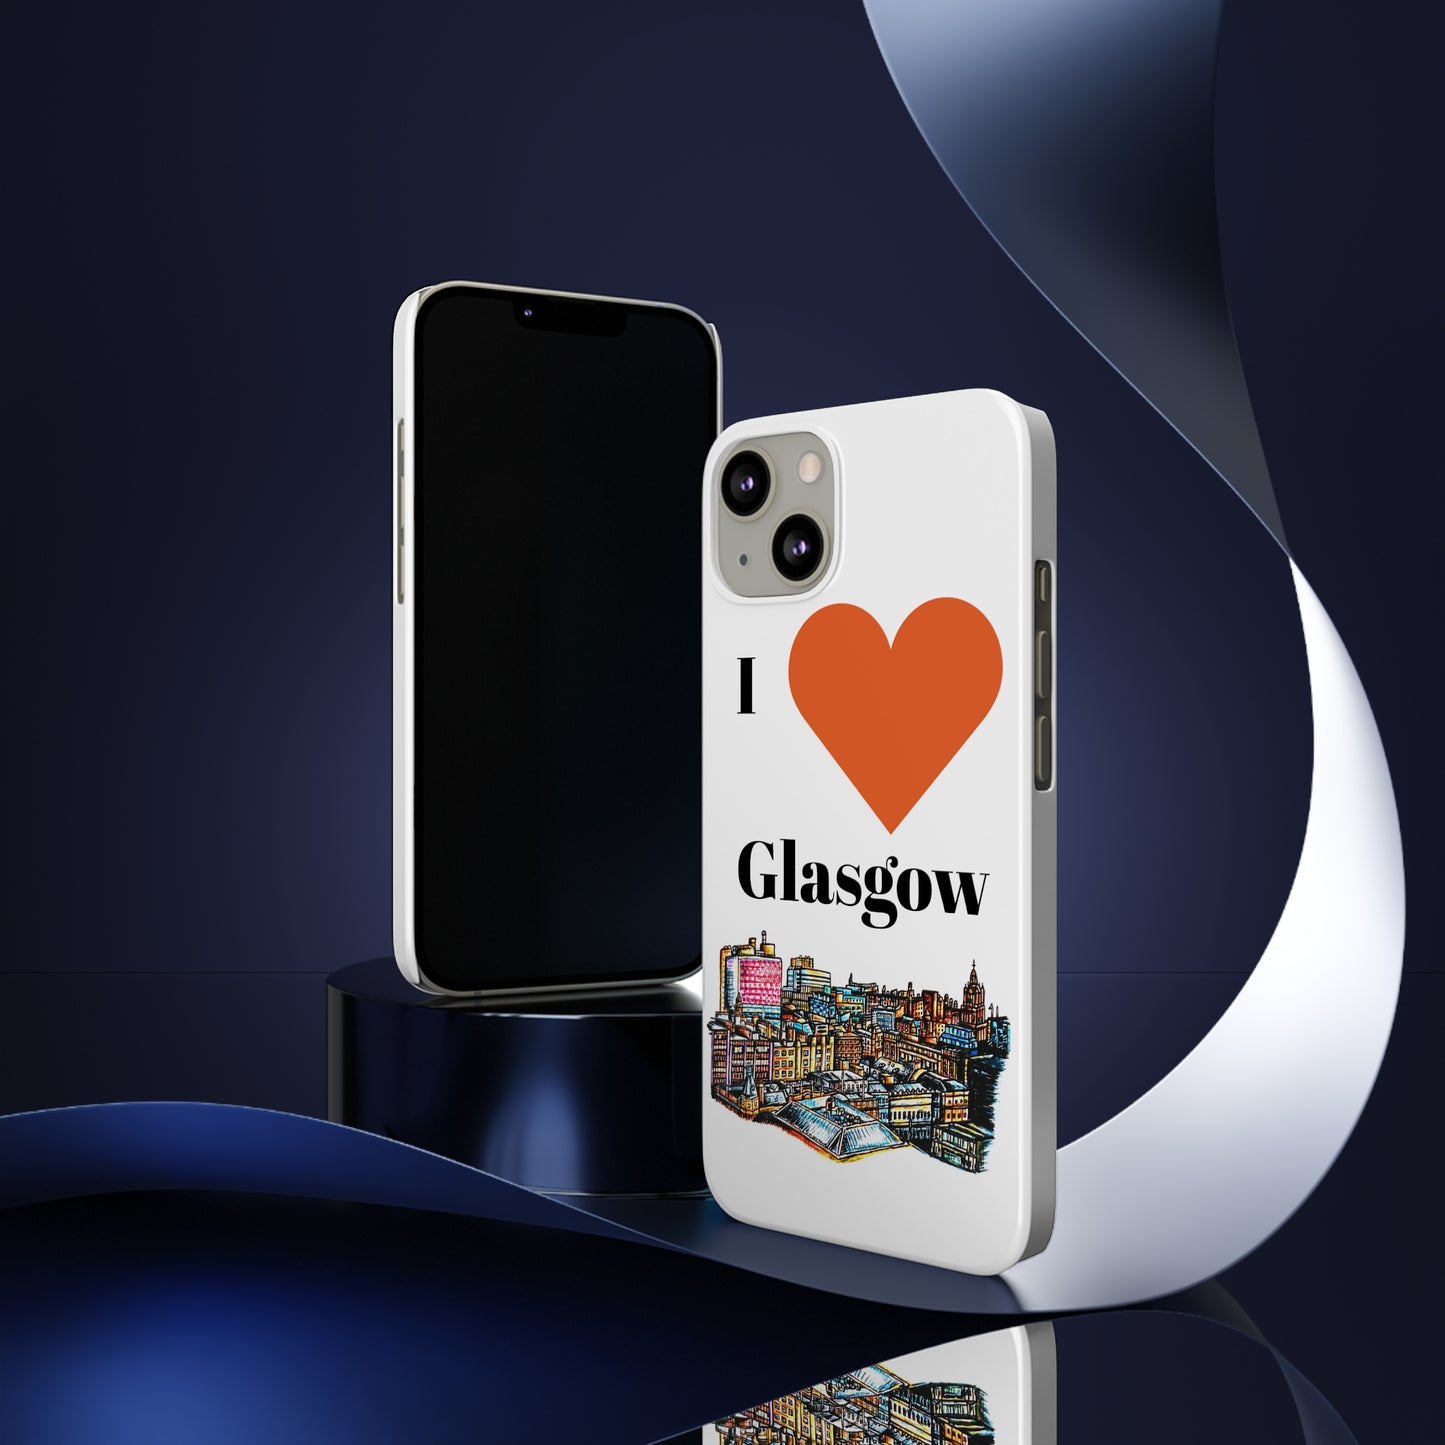 Slim Phone Case- I Love Glasgow Design